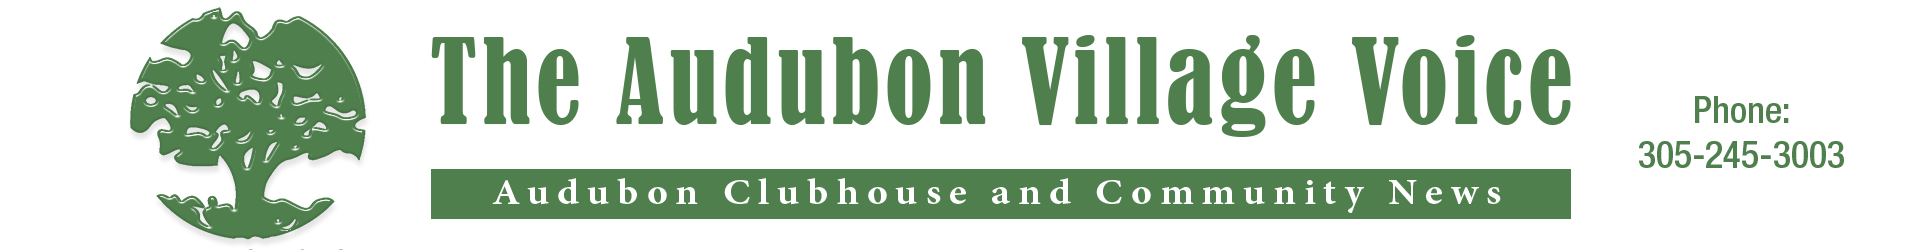 Welcome to The Audubon Village Voice